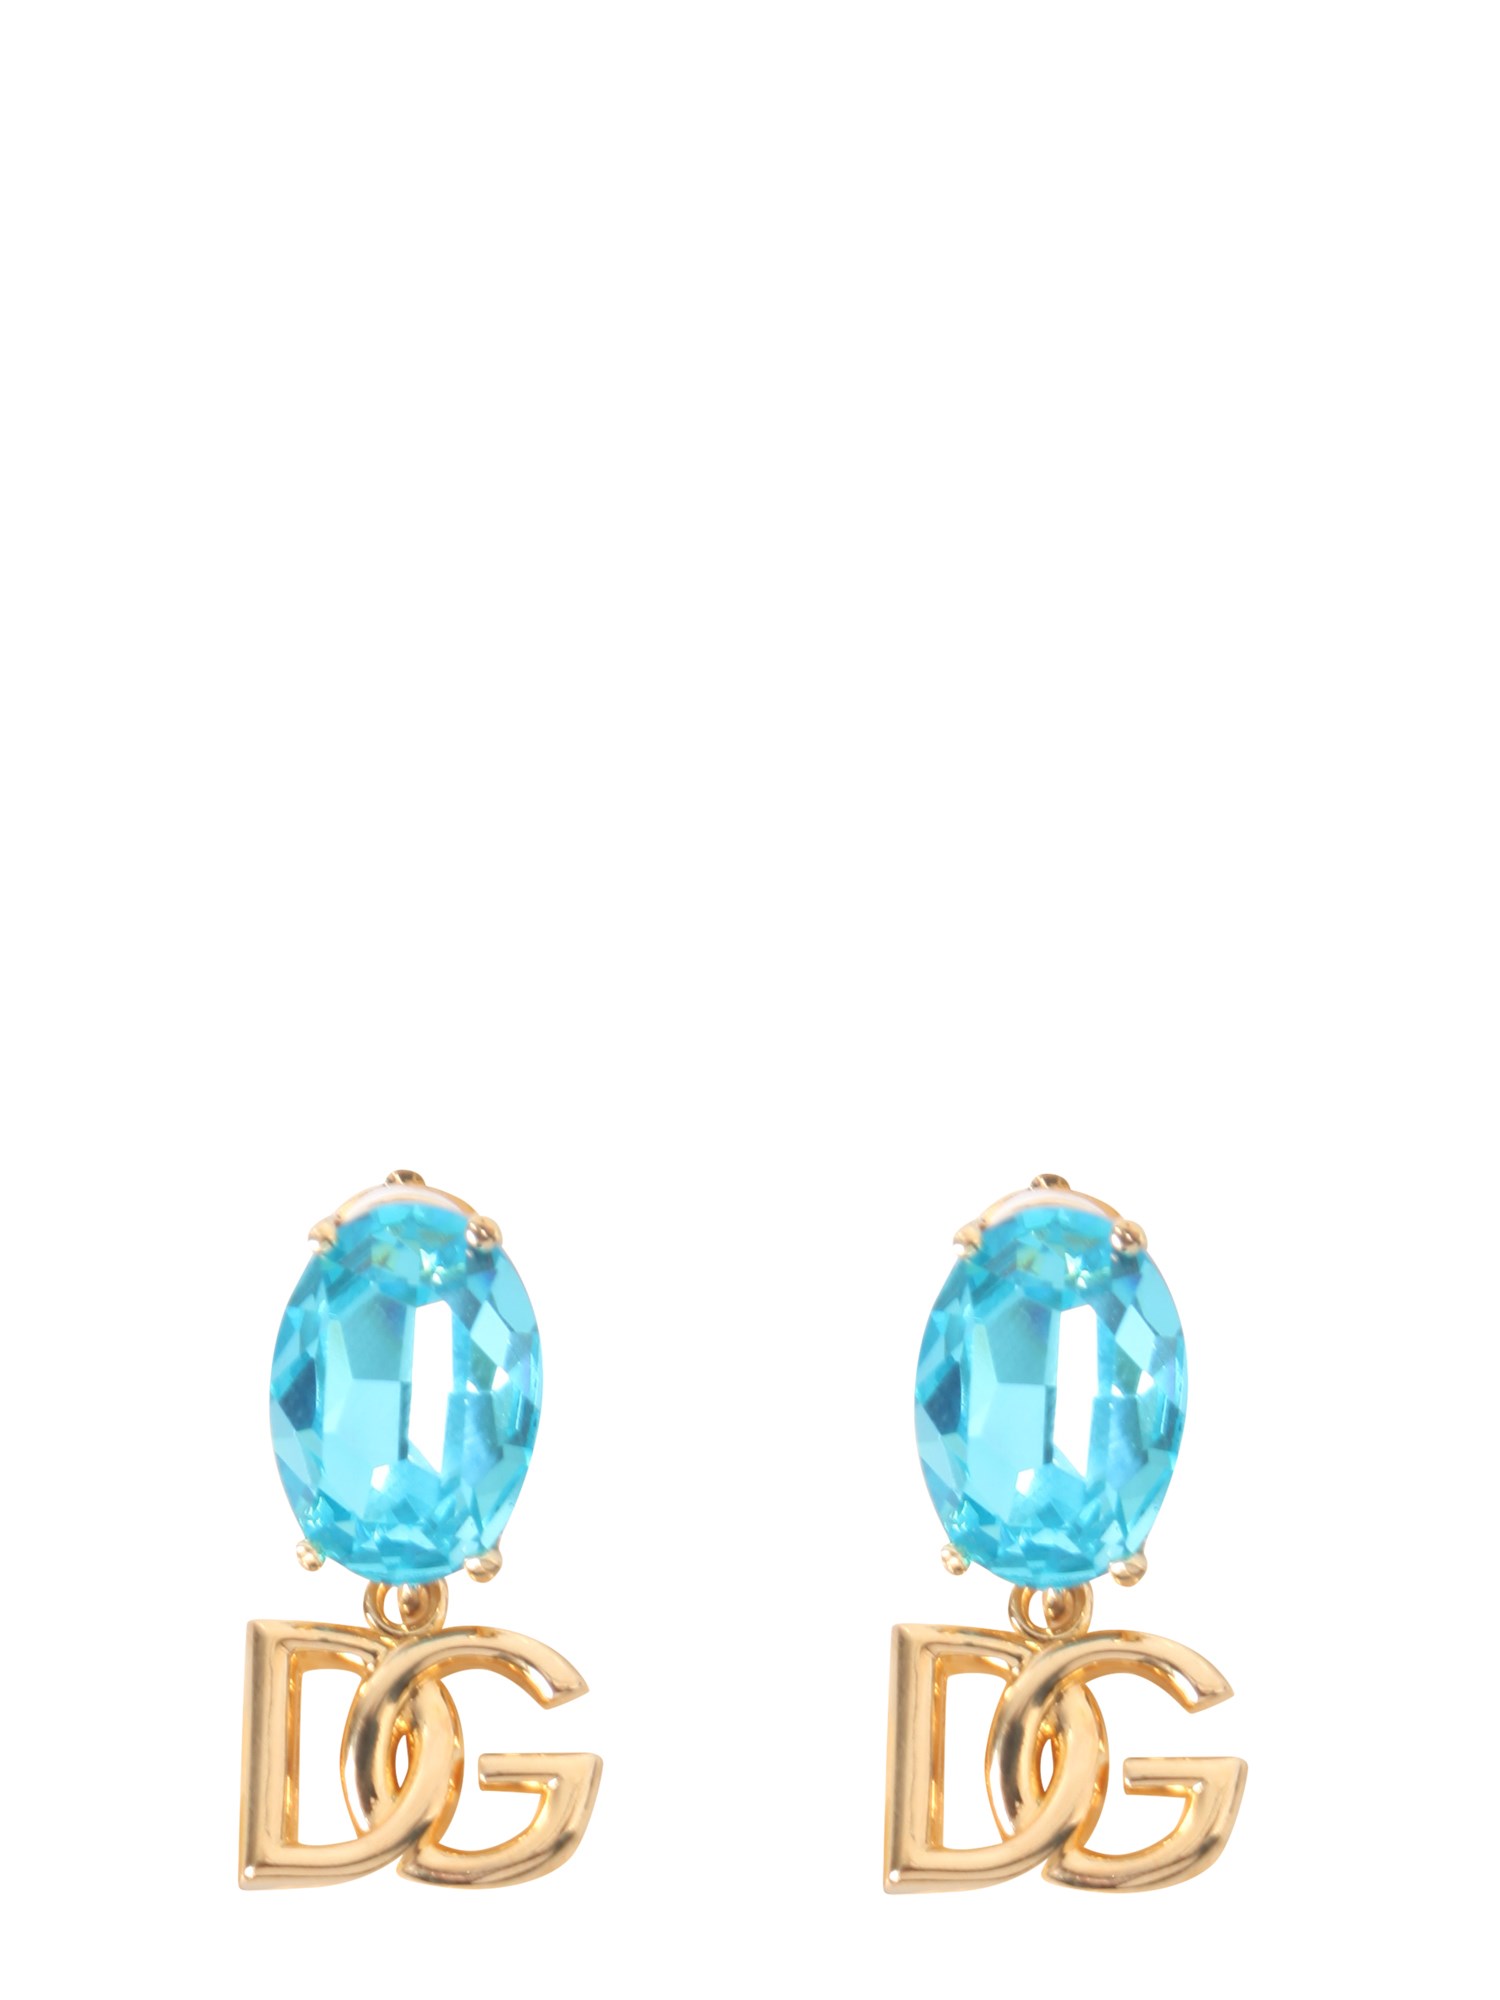 dolce & gabbana pendant earrings with rhinestones and logo